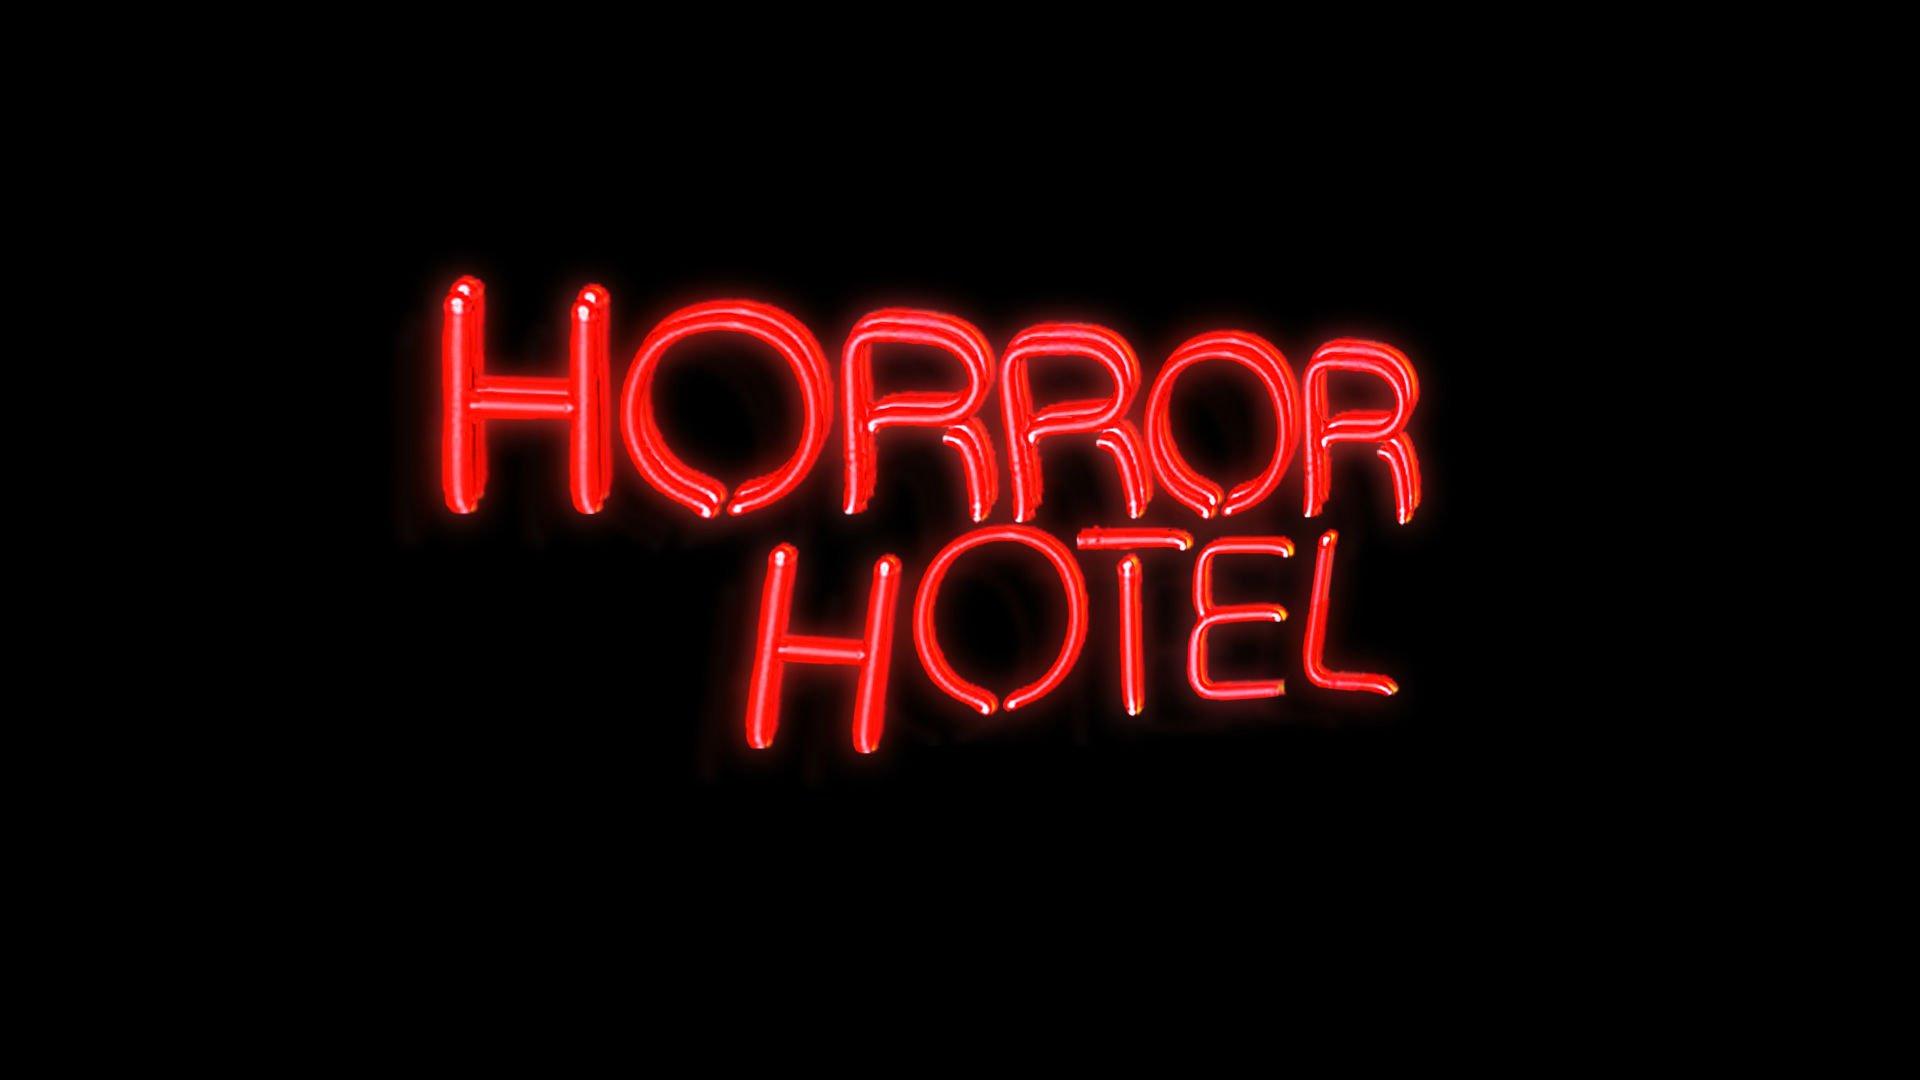 Horror Hotel Neon Sign Logo Wallpaper 66615 1920x1080px